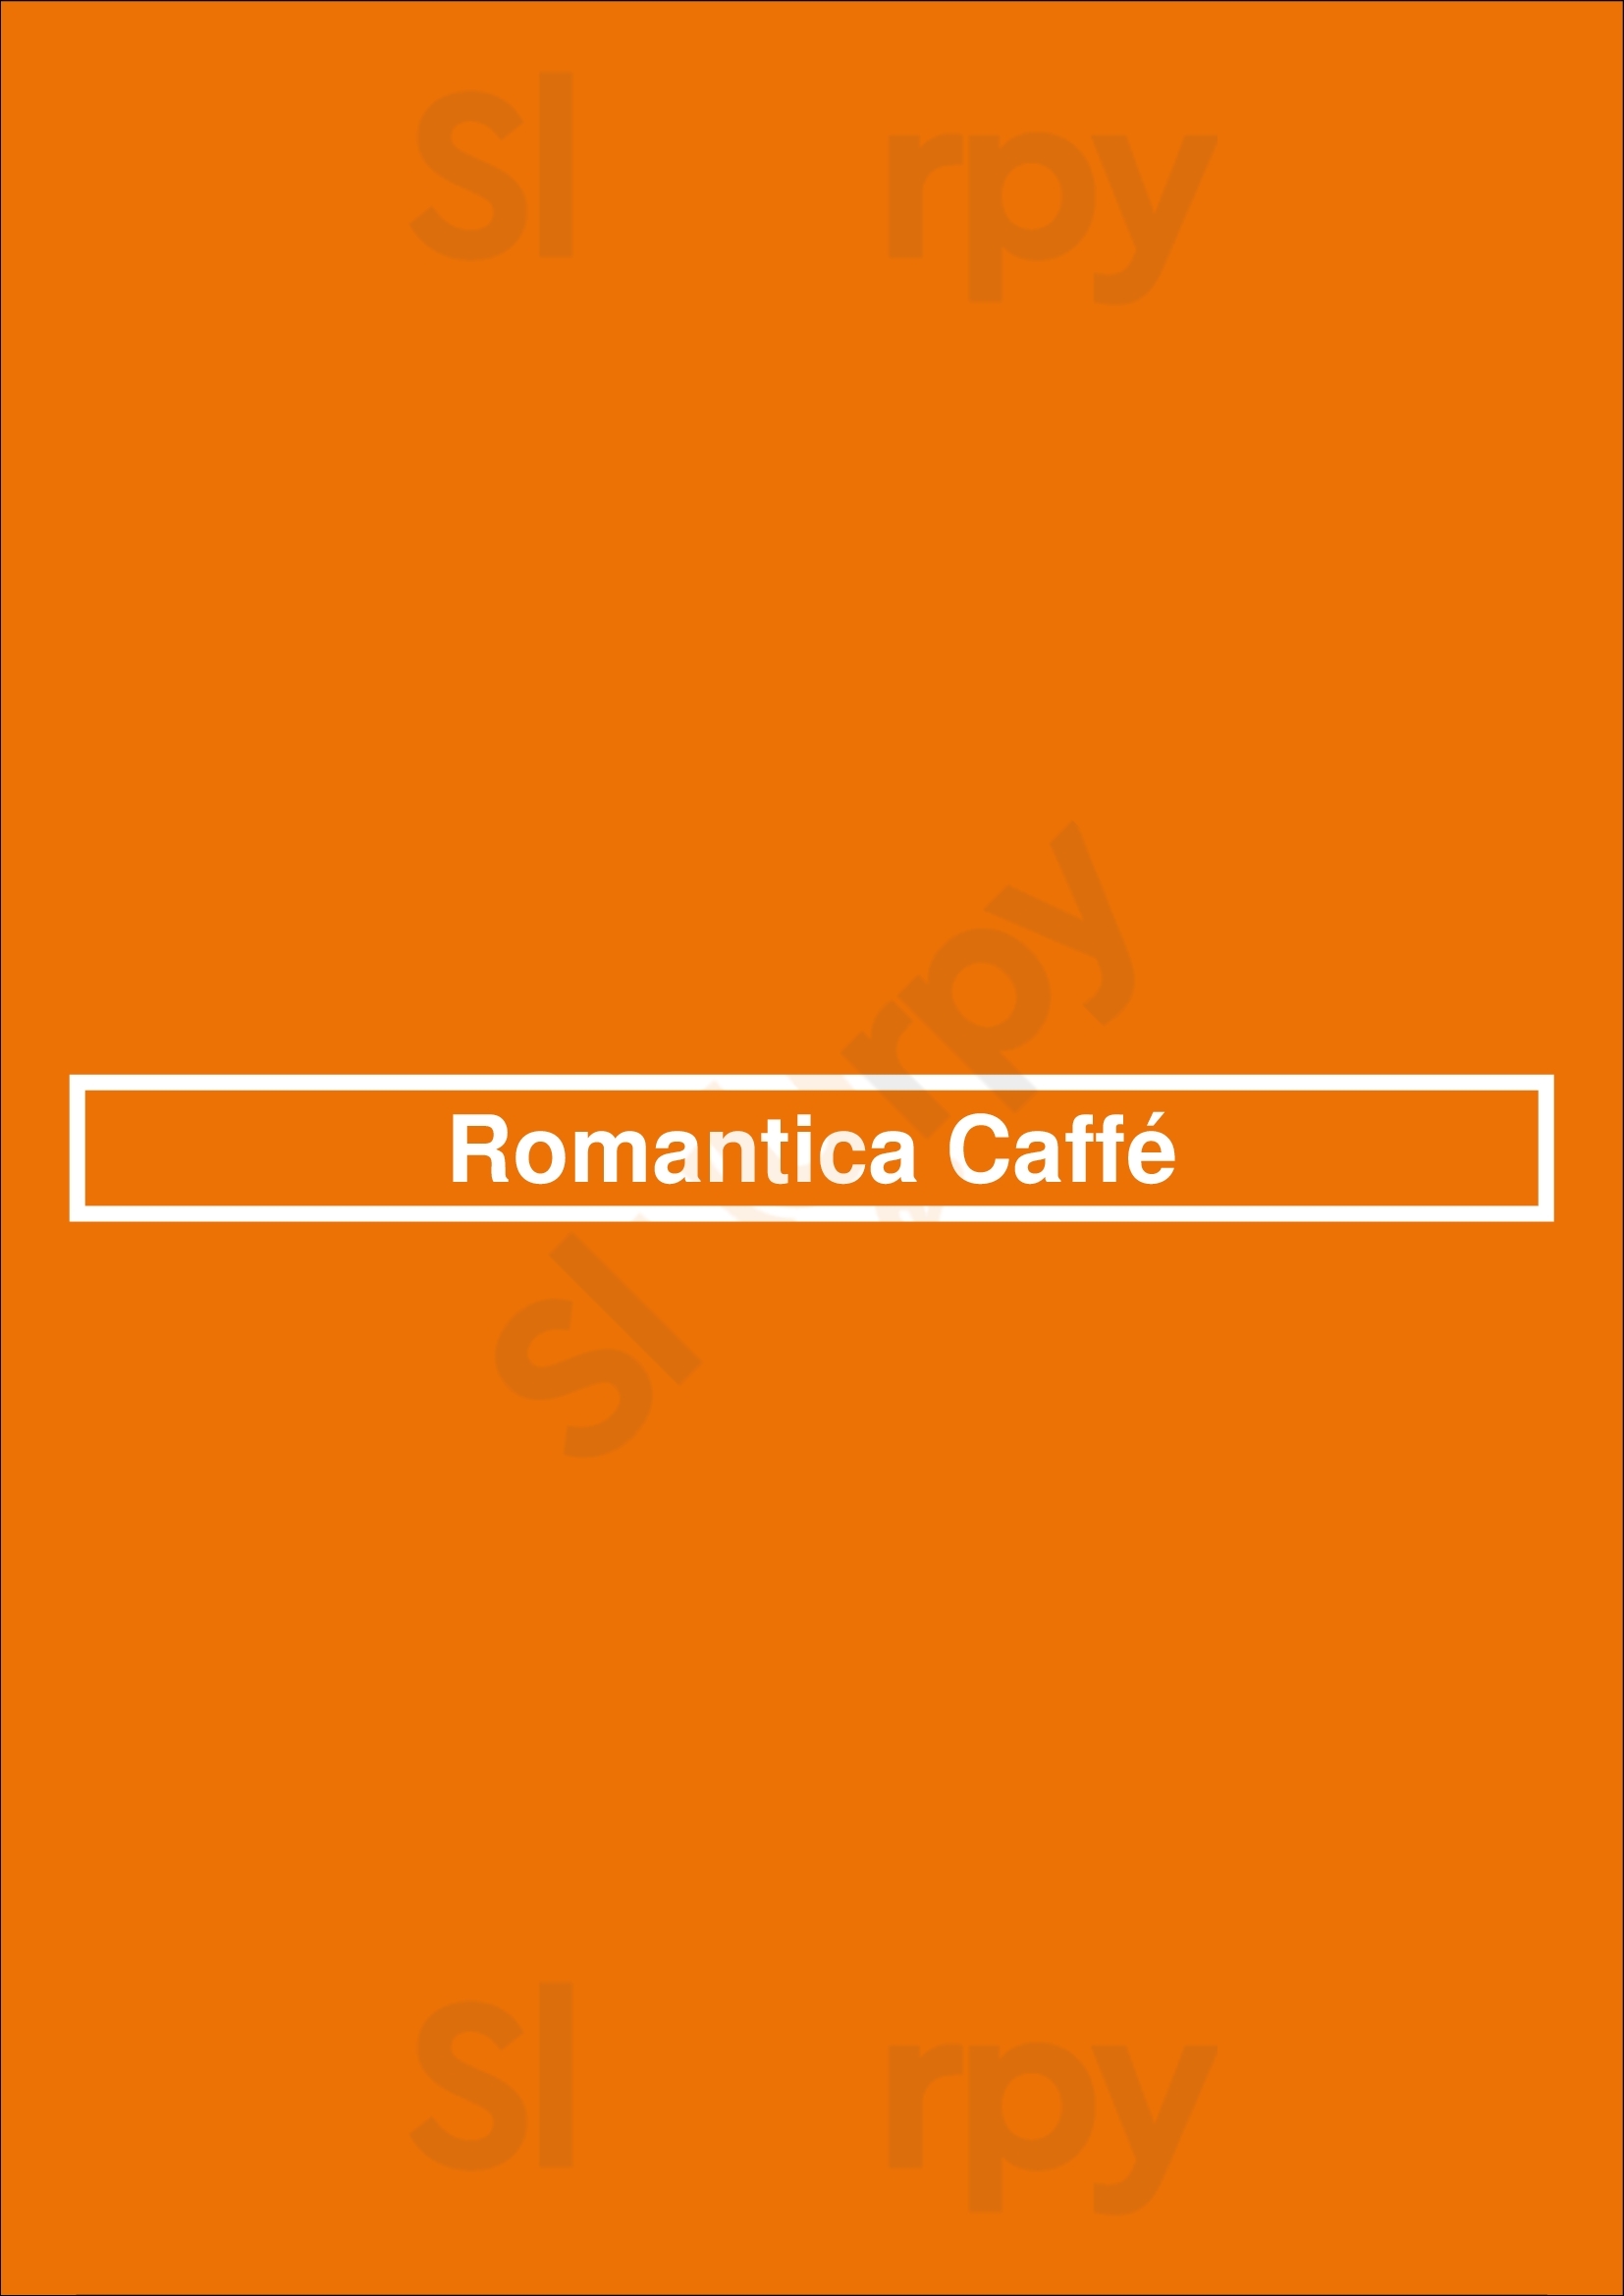 Romantica Caffé Invalides Paris Menu - 1